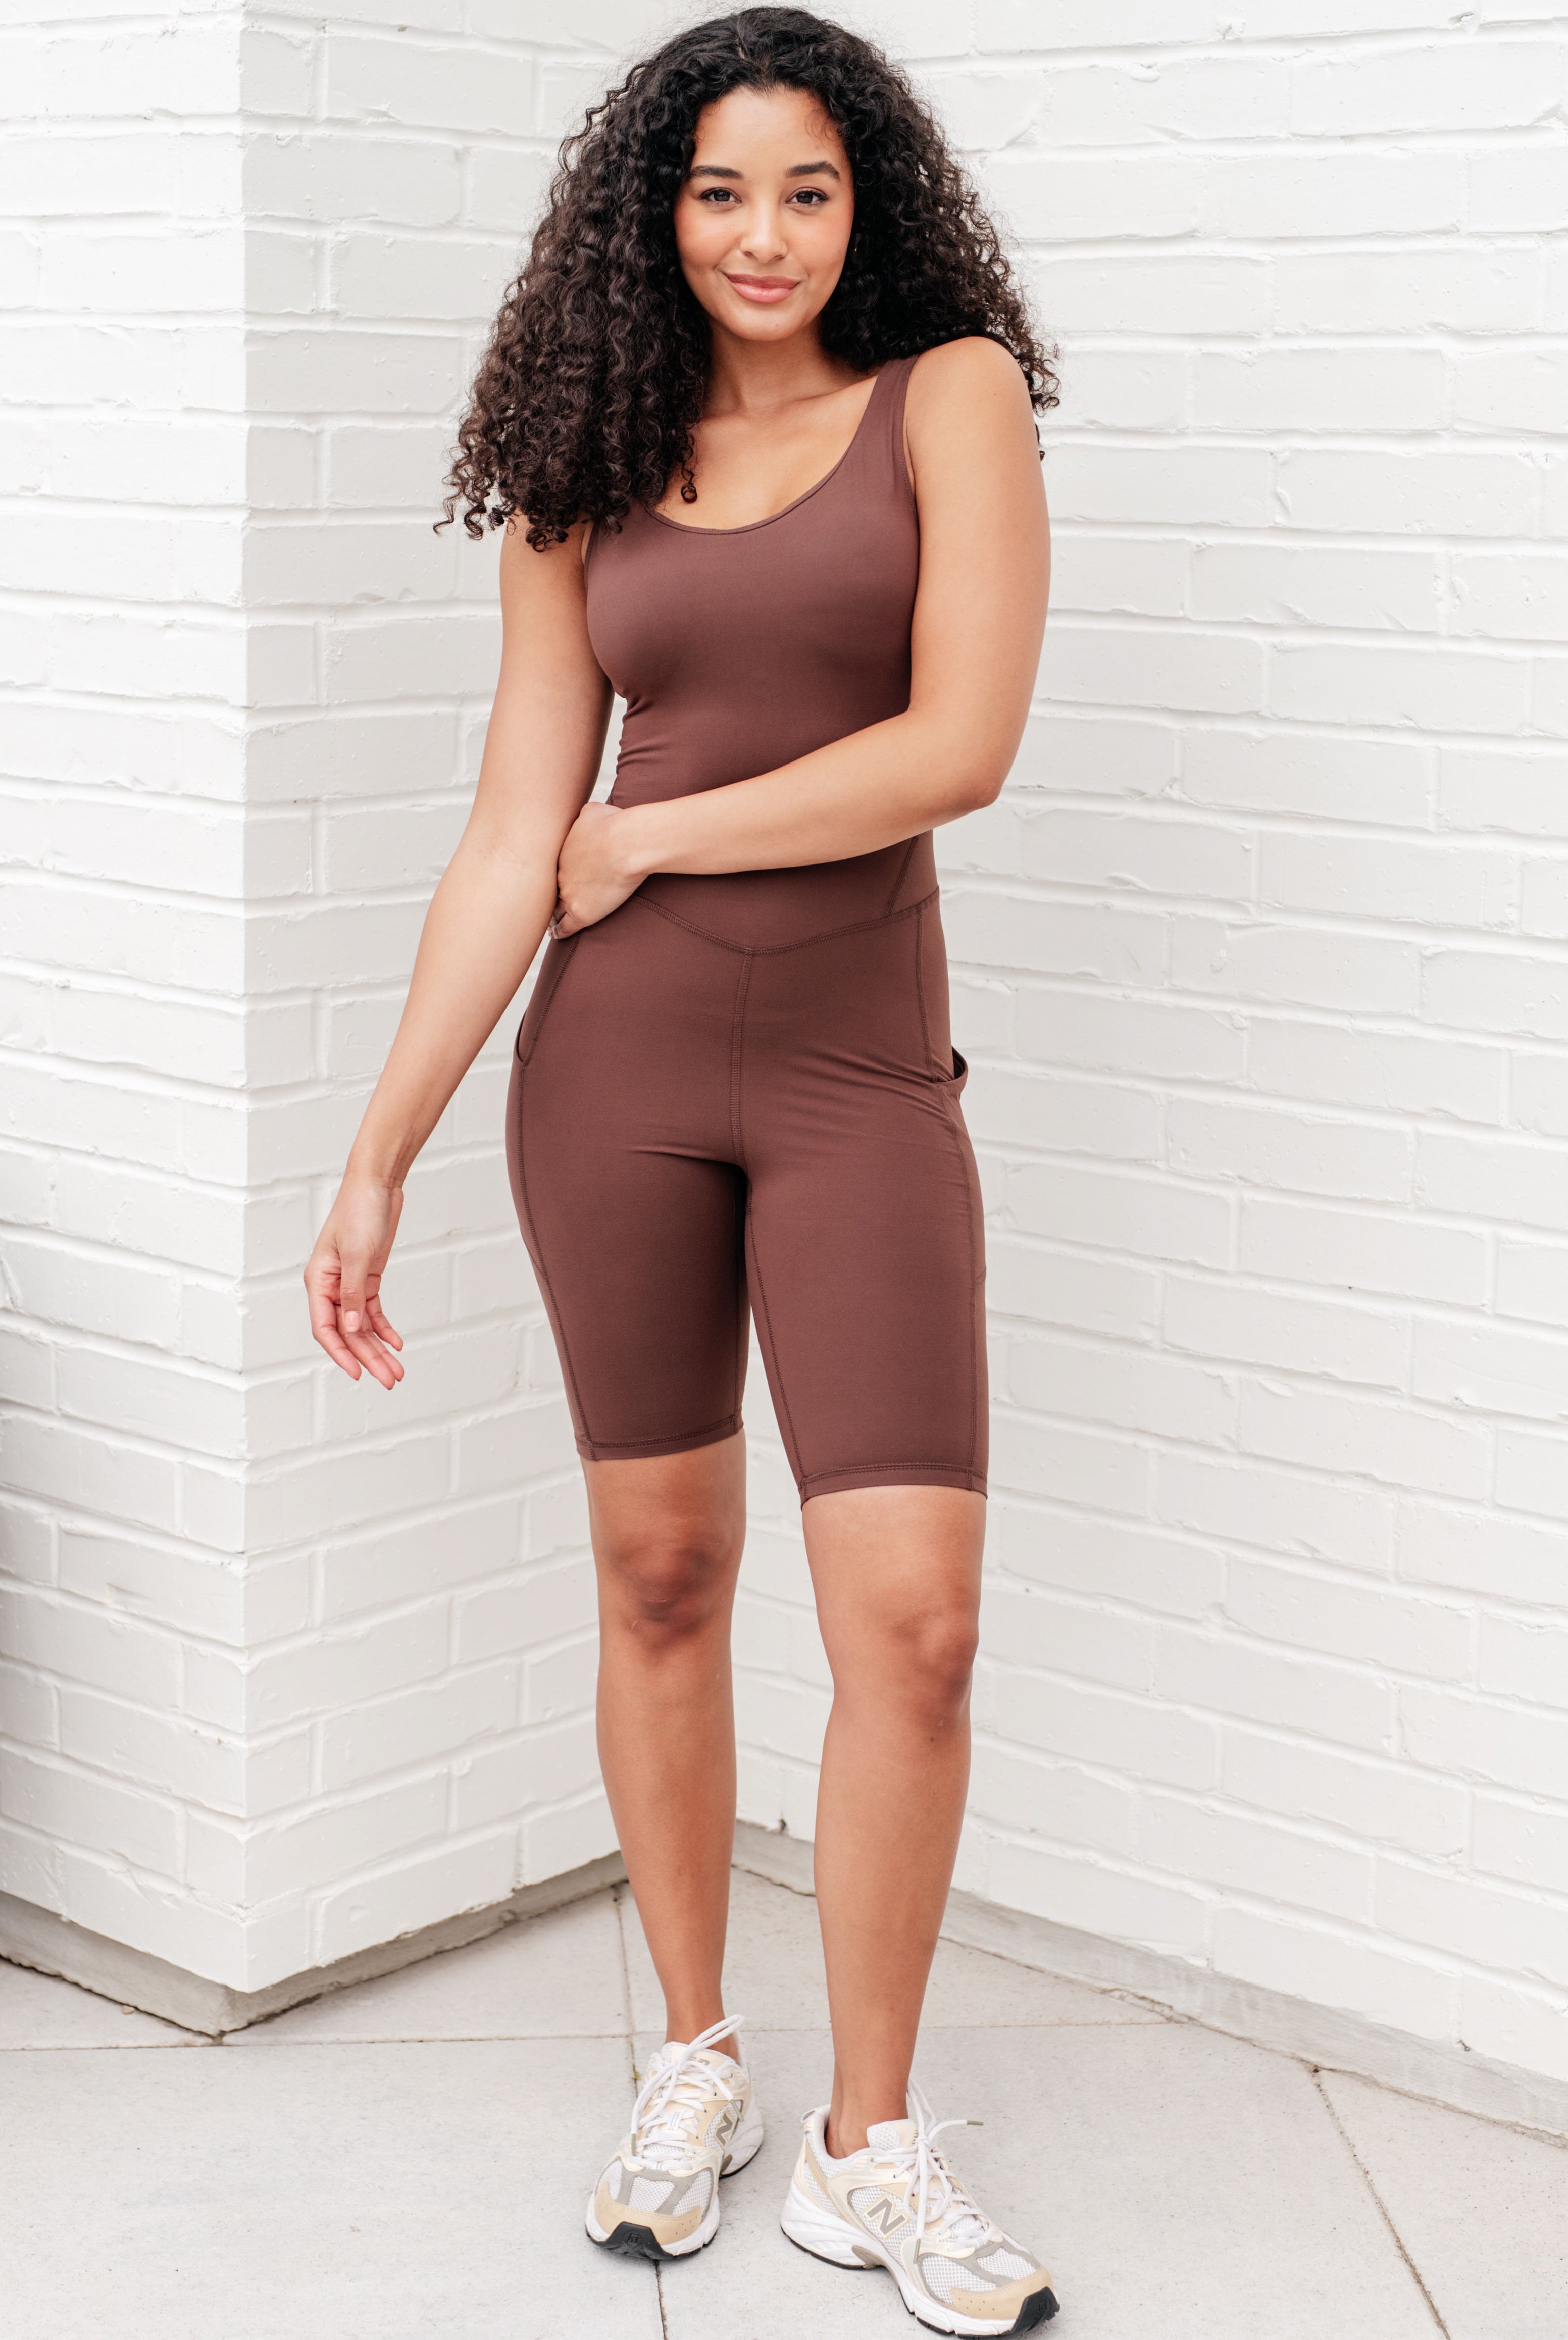 Sun Salutations Body Suit in Java-Bodysuits-Krush Kandy, Women's Online Fashion Boutique Located in Phoenix, Arizona (Scottsdale Area)